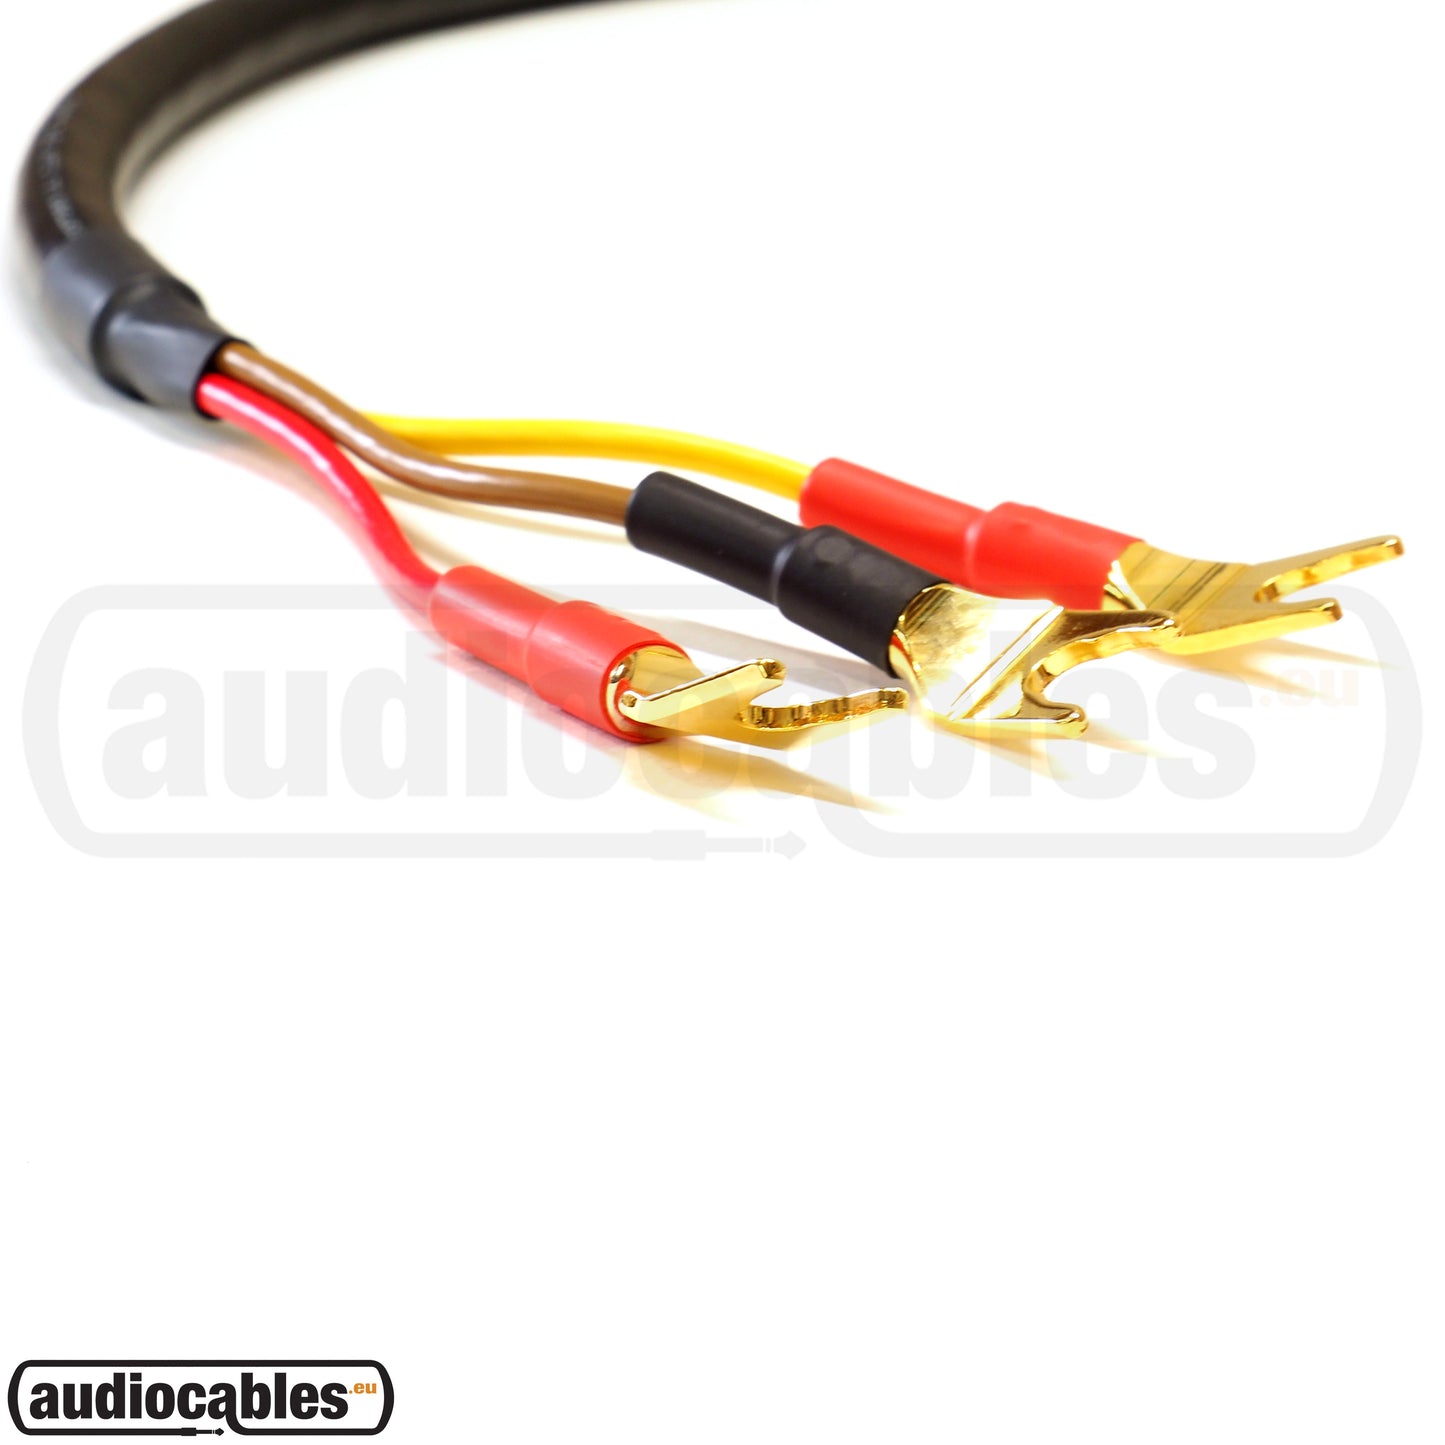 Mogami Upgrade Speaker Cable (3 wire) for REL Subwoofer - Speakon to Spades